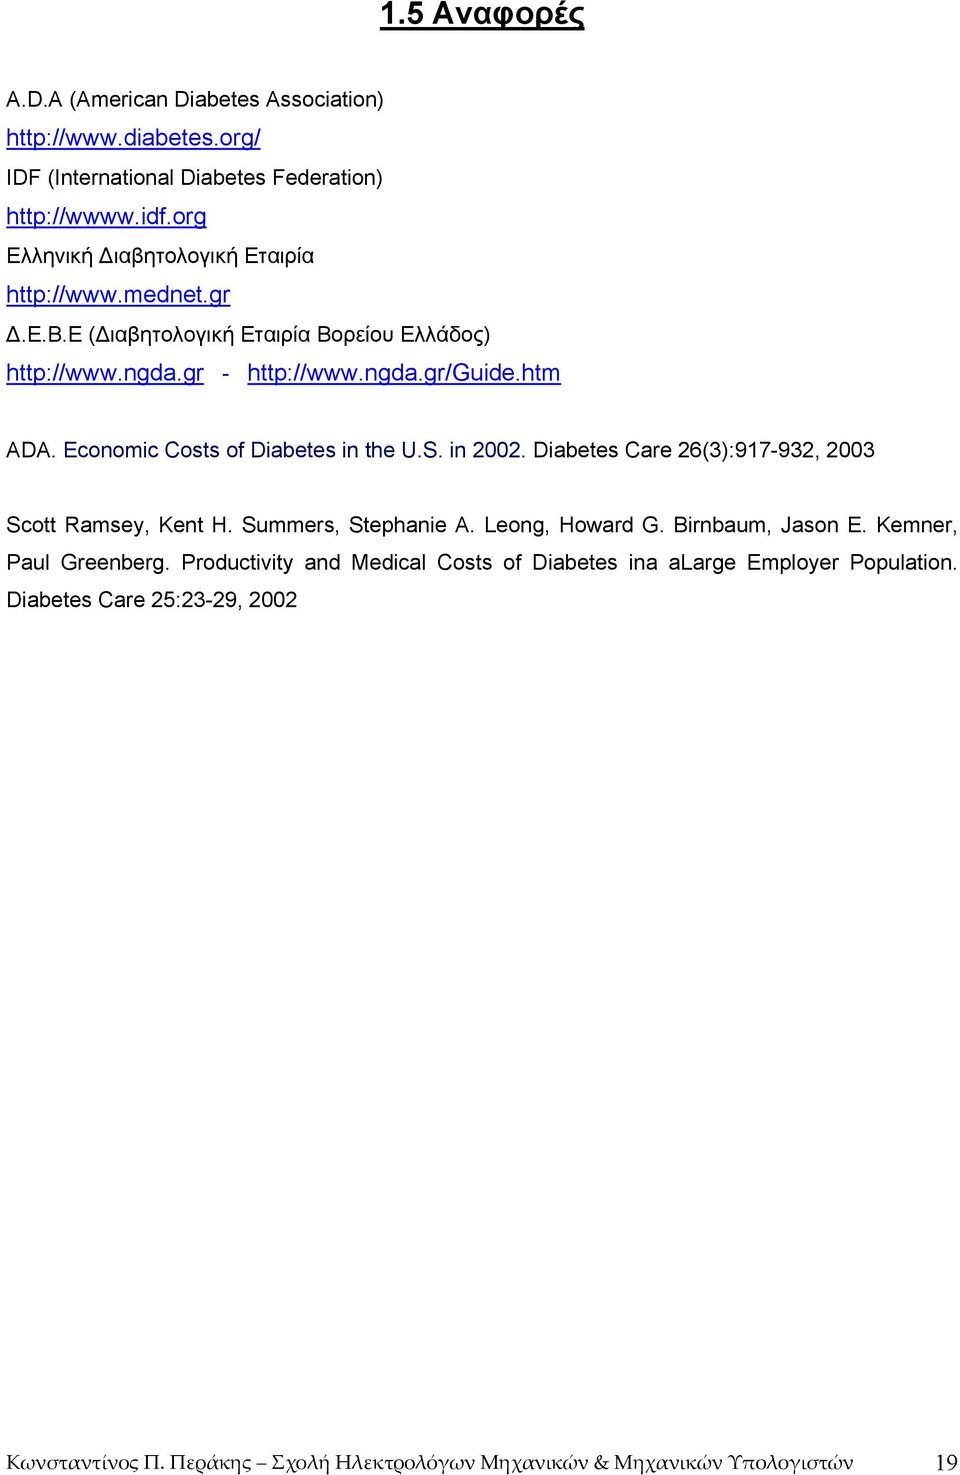 Economic Costs of Diabetes in the U.S. in 2002. Diabetes Care 26(3):917-932, 2003 Scott Ramsey, Kent H. Summers, Stephanie A. Leong, Howard G. Birnbaum, Jason E.